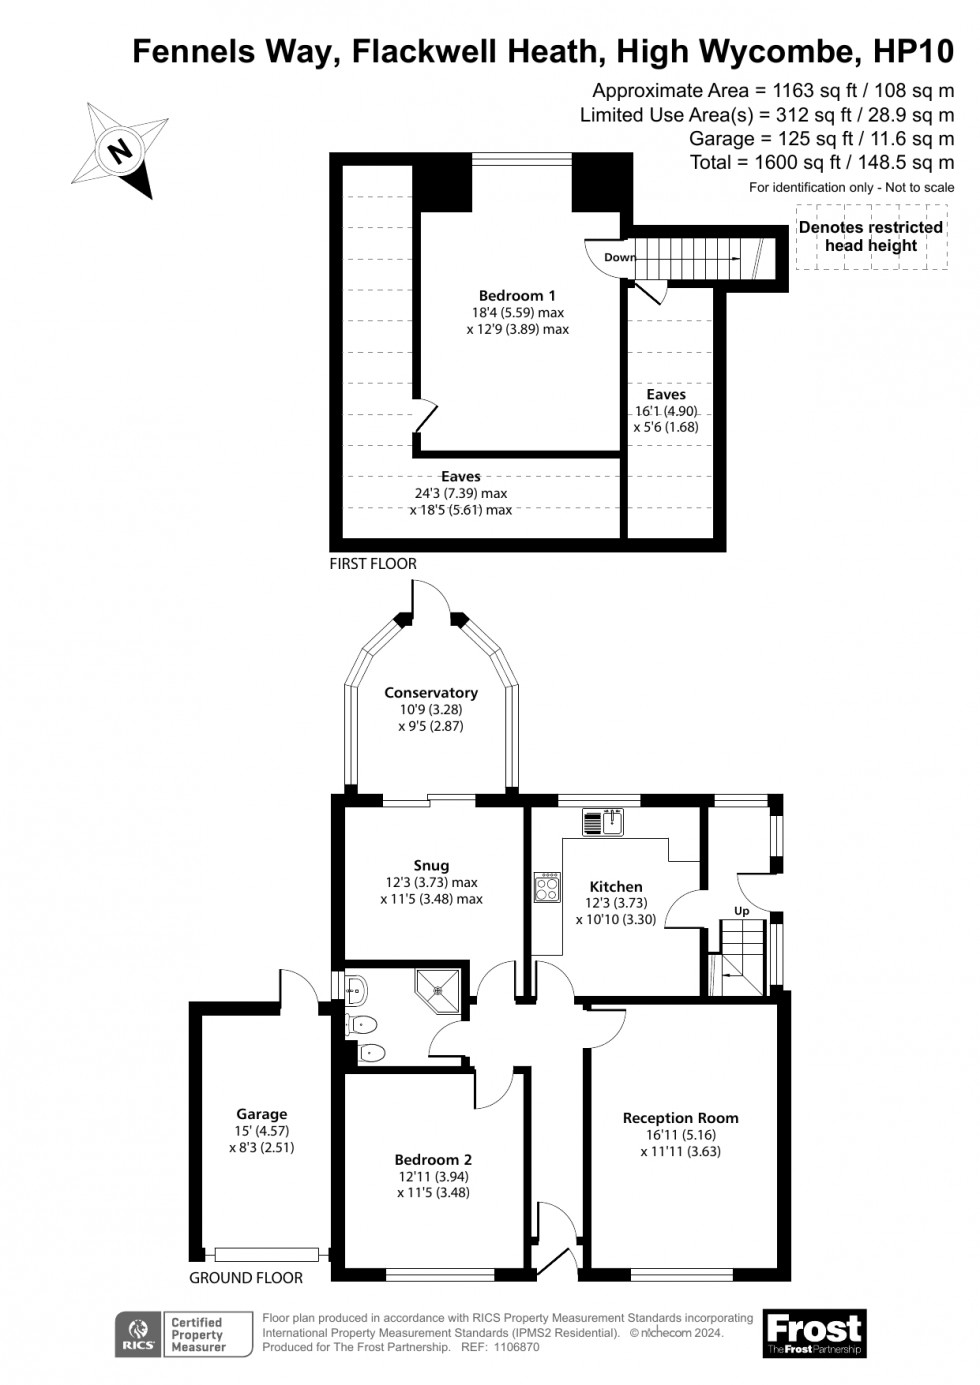 Floorplan for Flackwell Heath, High Wycombe, HP10